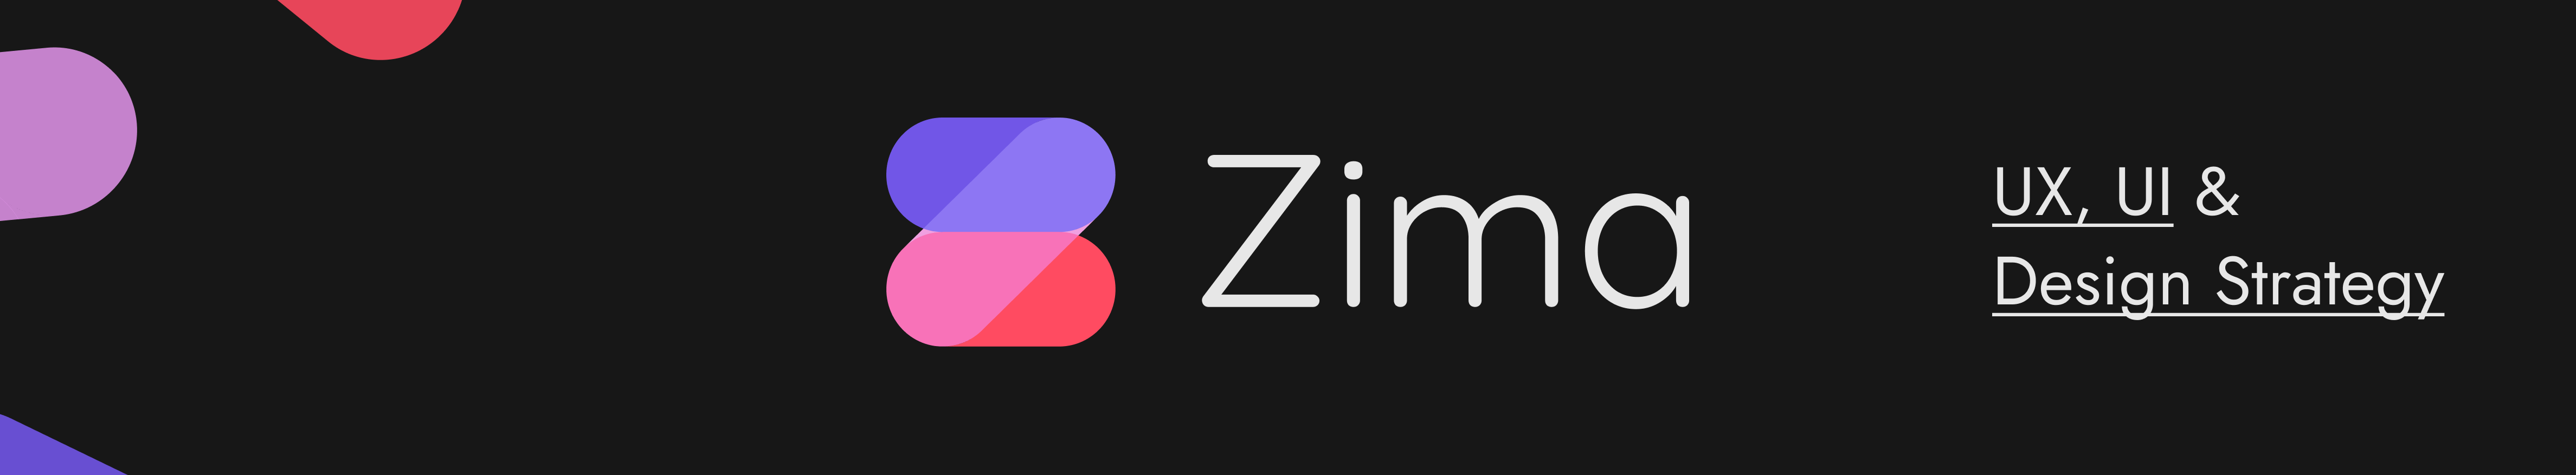 Zima UX, UI & Design Strategy's profile banner